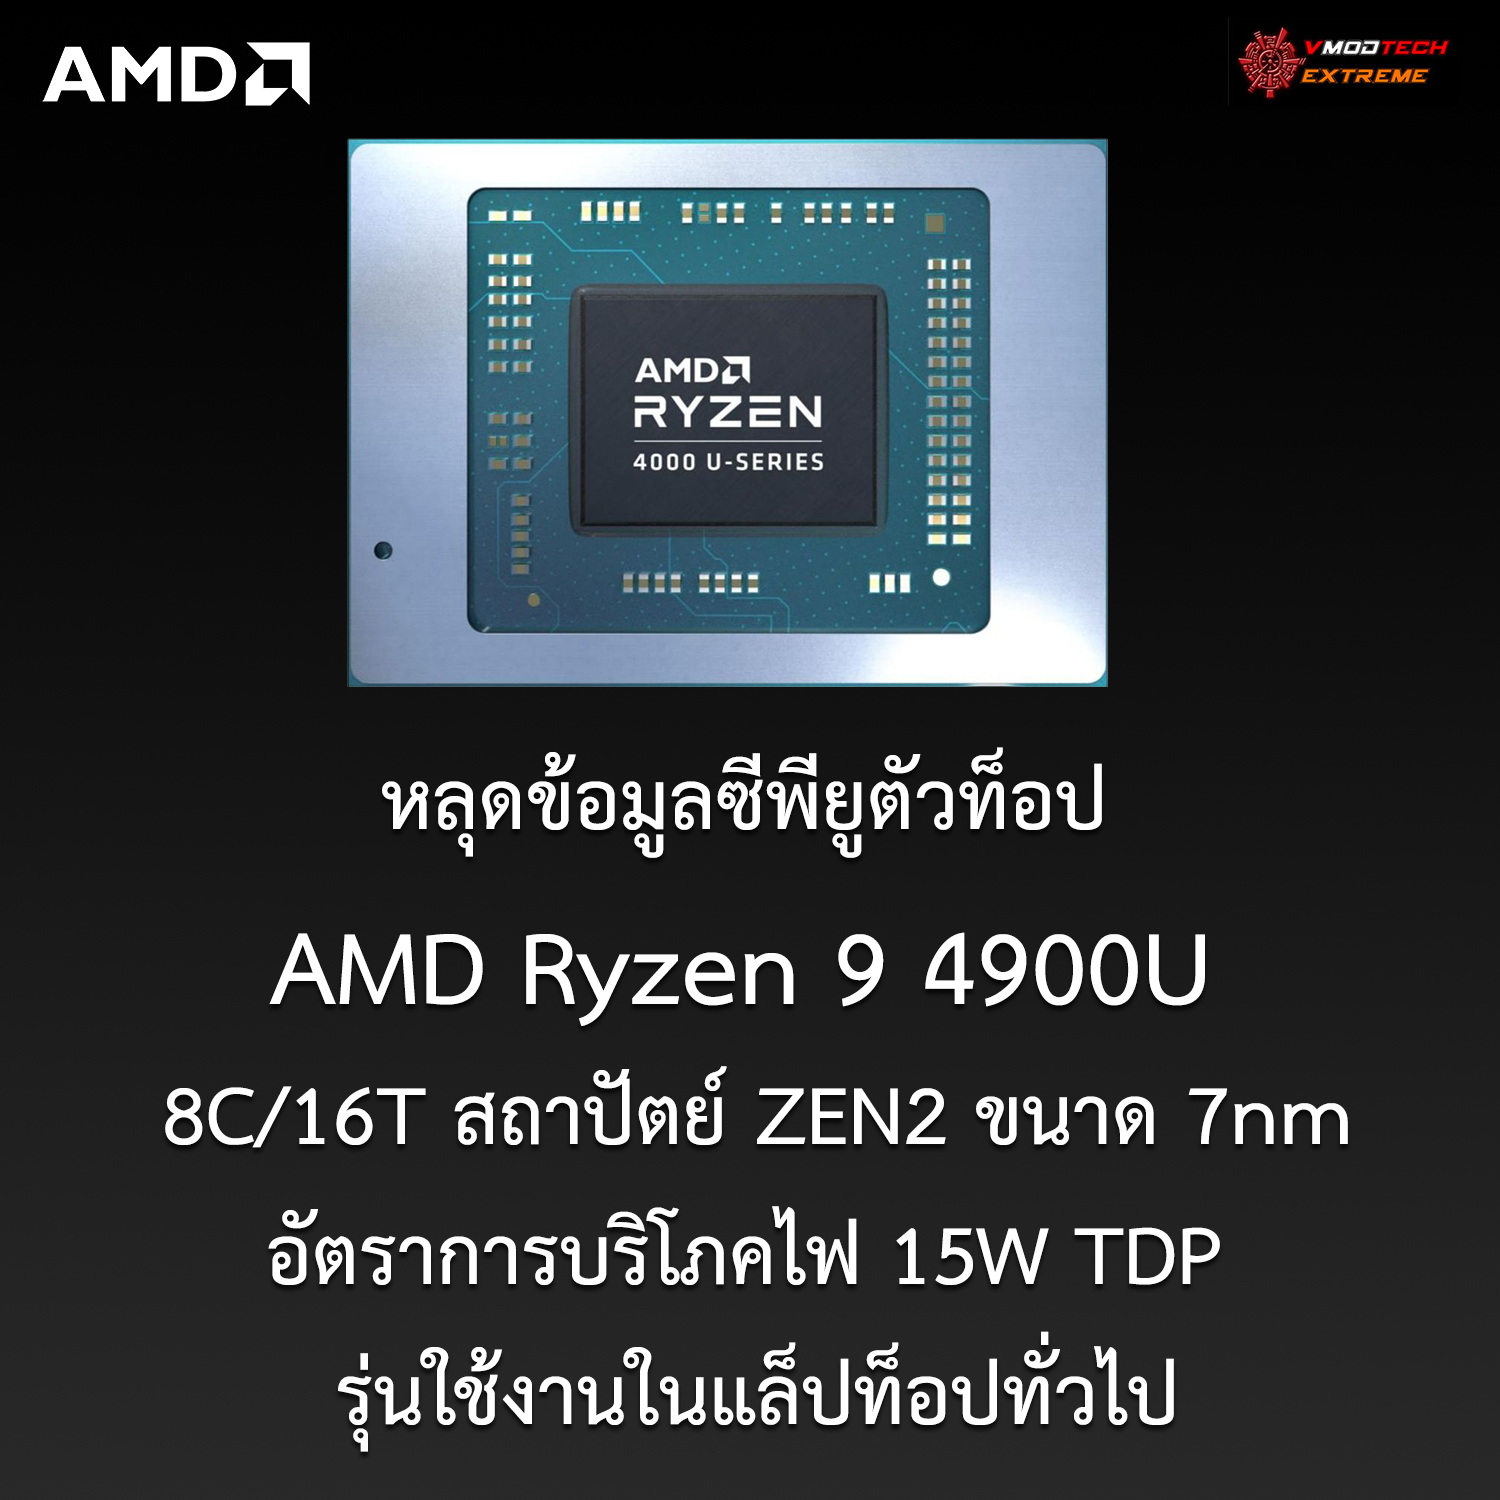 amd ryzen 9 4900u หลุดข้อมูลซีพียู AMD Ryzen 9 4900U 8C/16T สถาปัตย์ ZEN2 รุ่นใหม่ล่าสุดที่ยังไม่เปิดตัวอย่างเป็นทางการใช้งานในแล็ปท็อปทั่วไป 